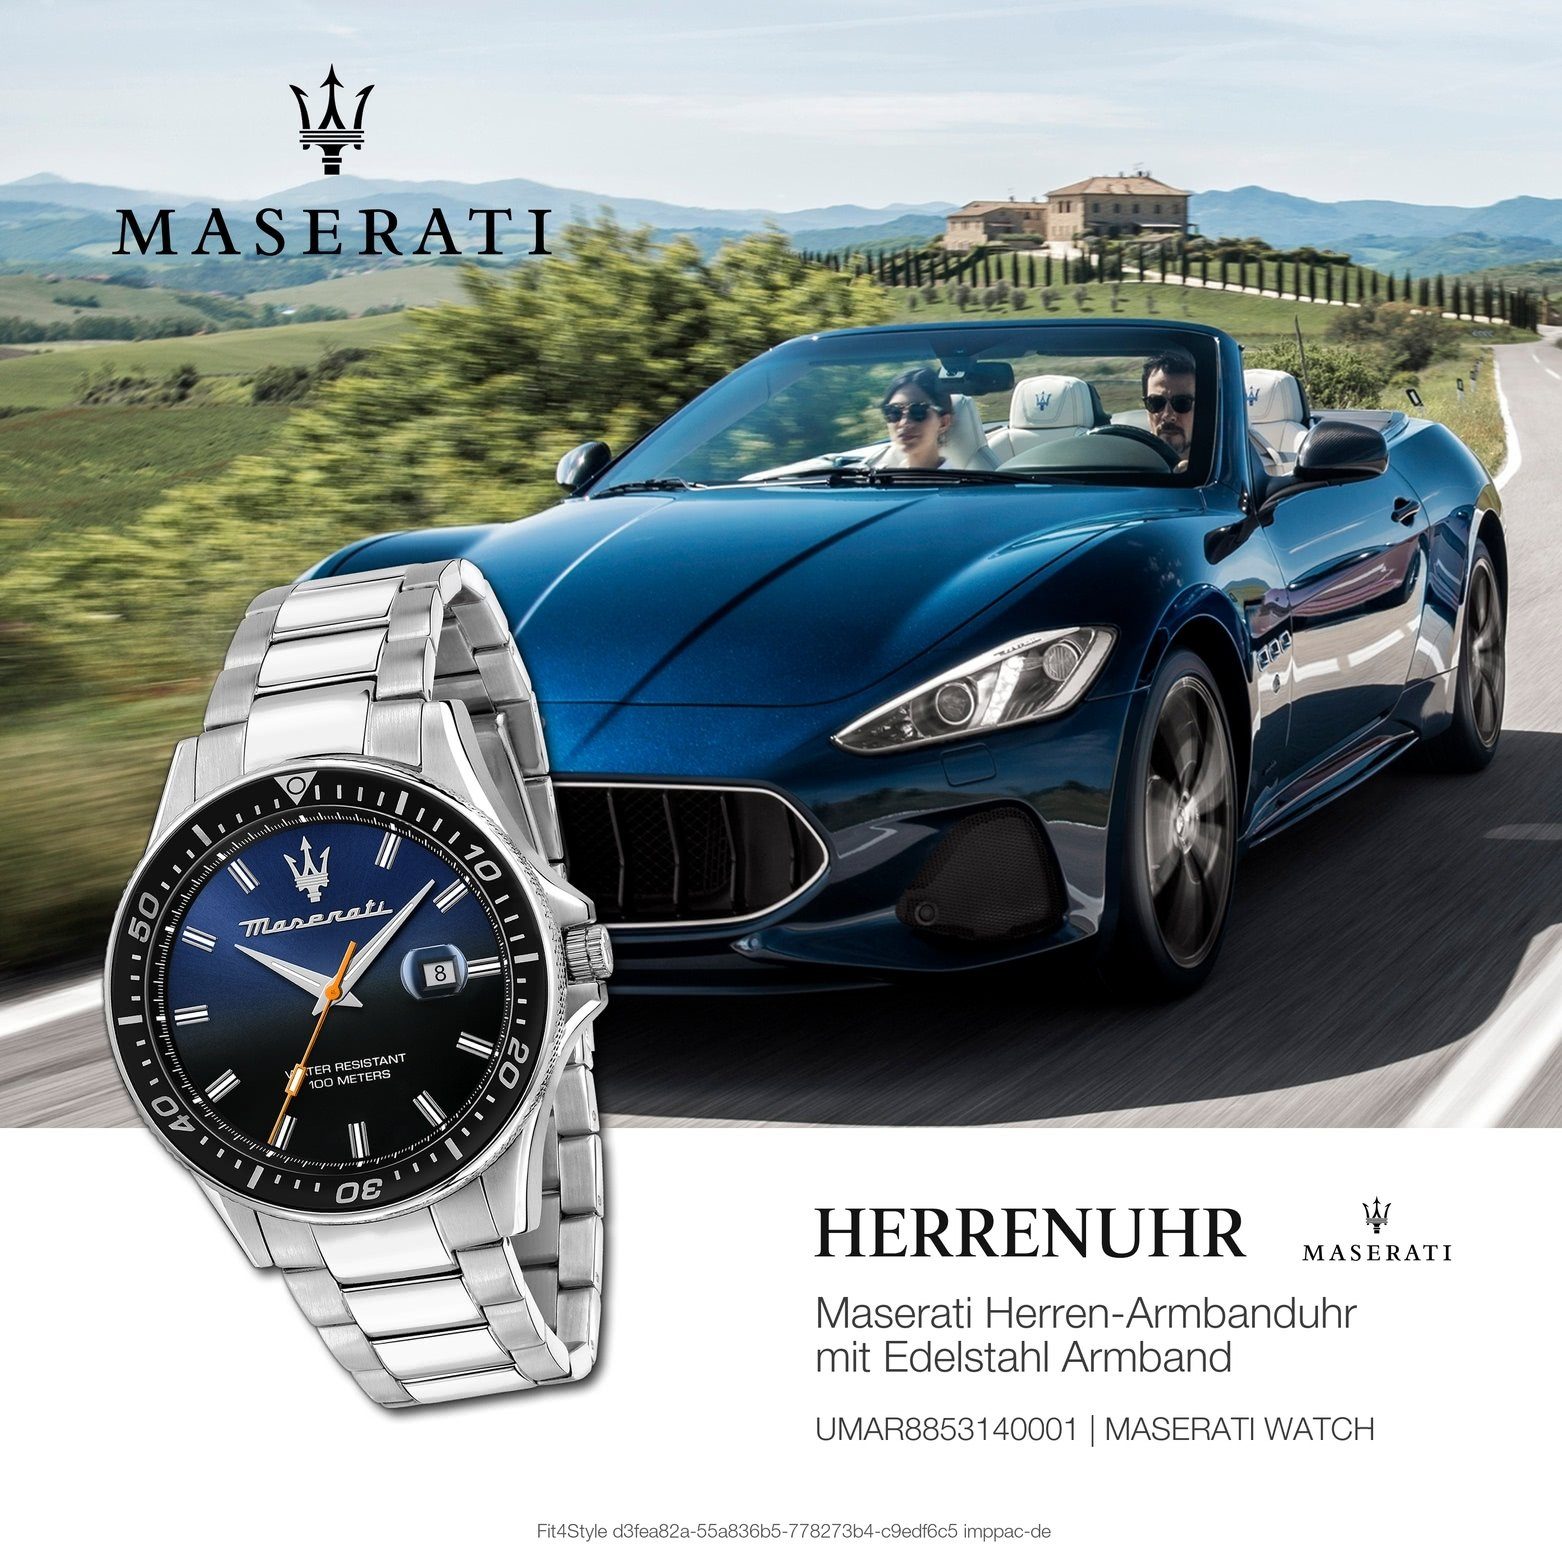 (ca. silber Edelstahlarmband, Uhr 44mm) Analog Italy MASERATI Maserati Quarzuhr Herren rund, Herrenuhr SFIDA, Made-In groß